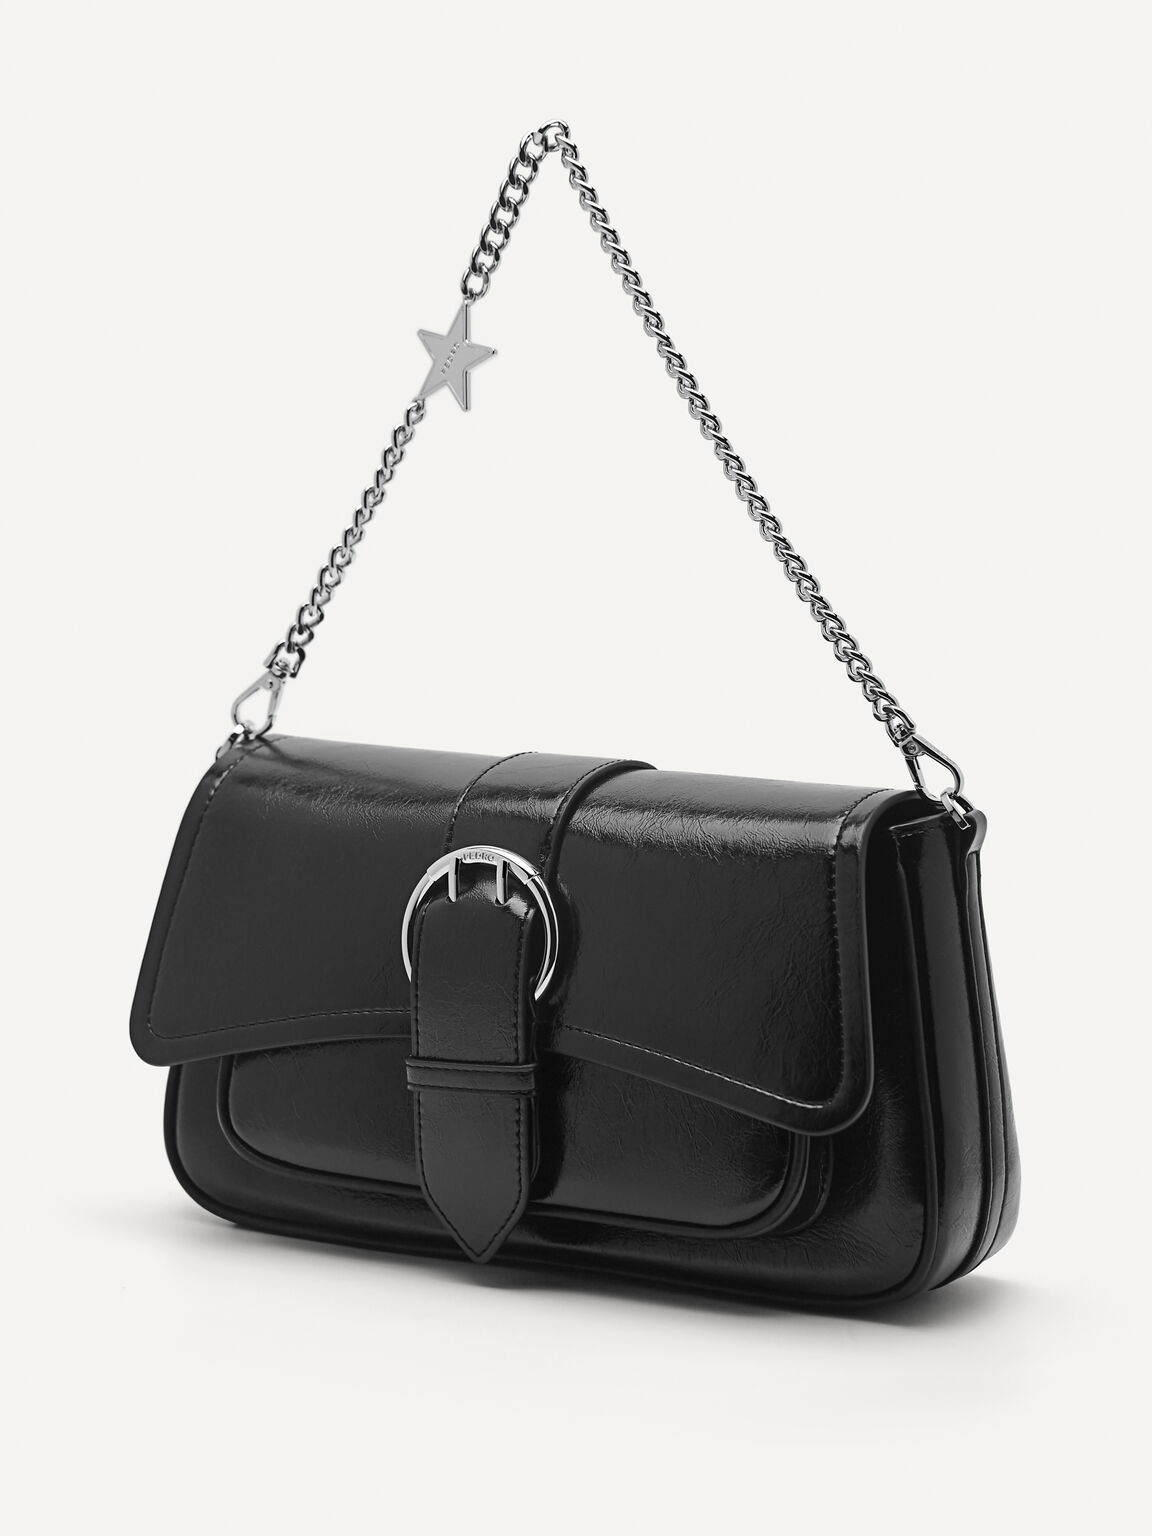 Buckle Shoulder Bag with Chain Detail, Black